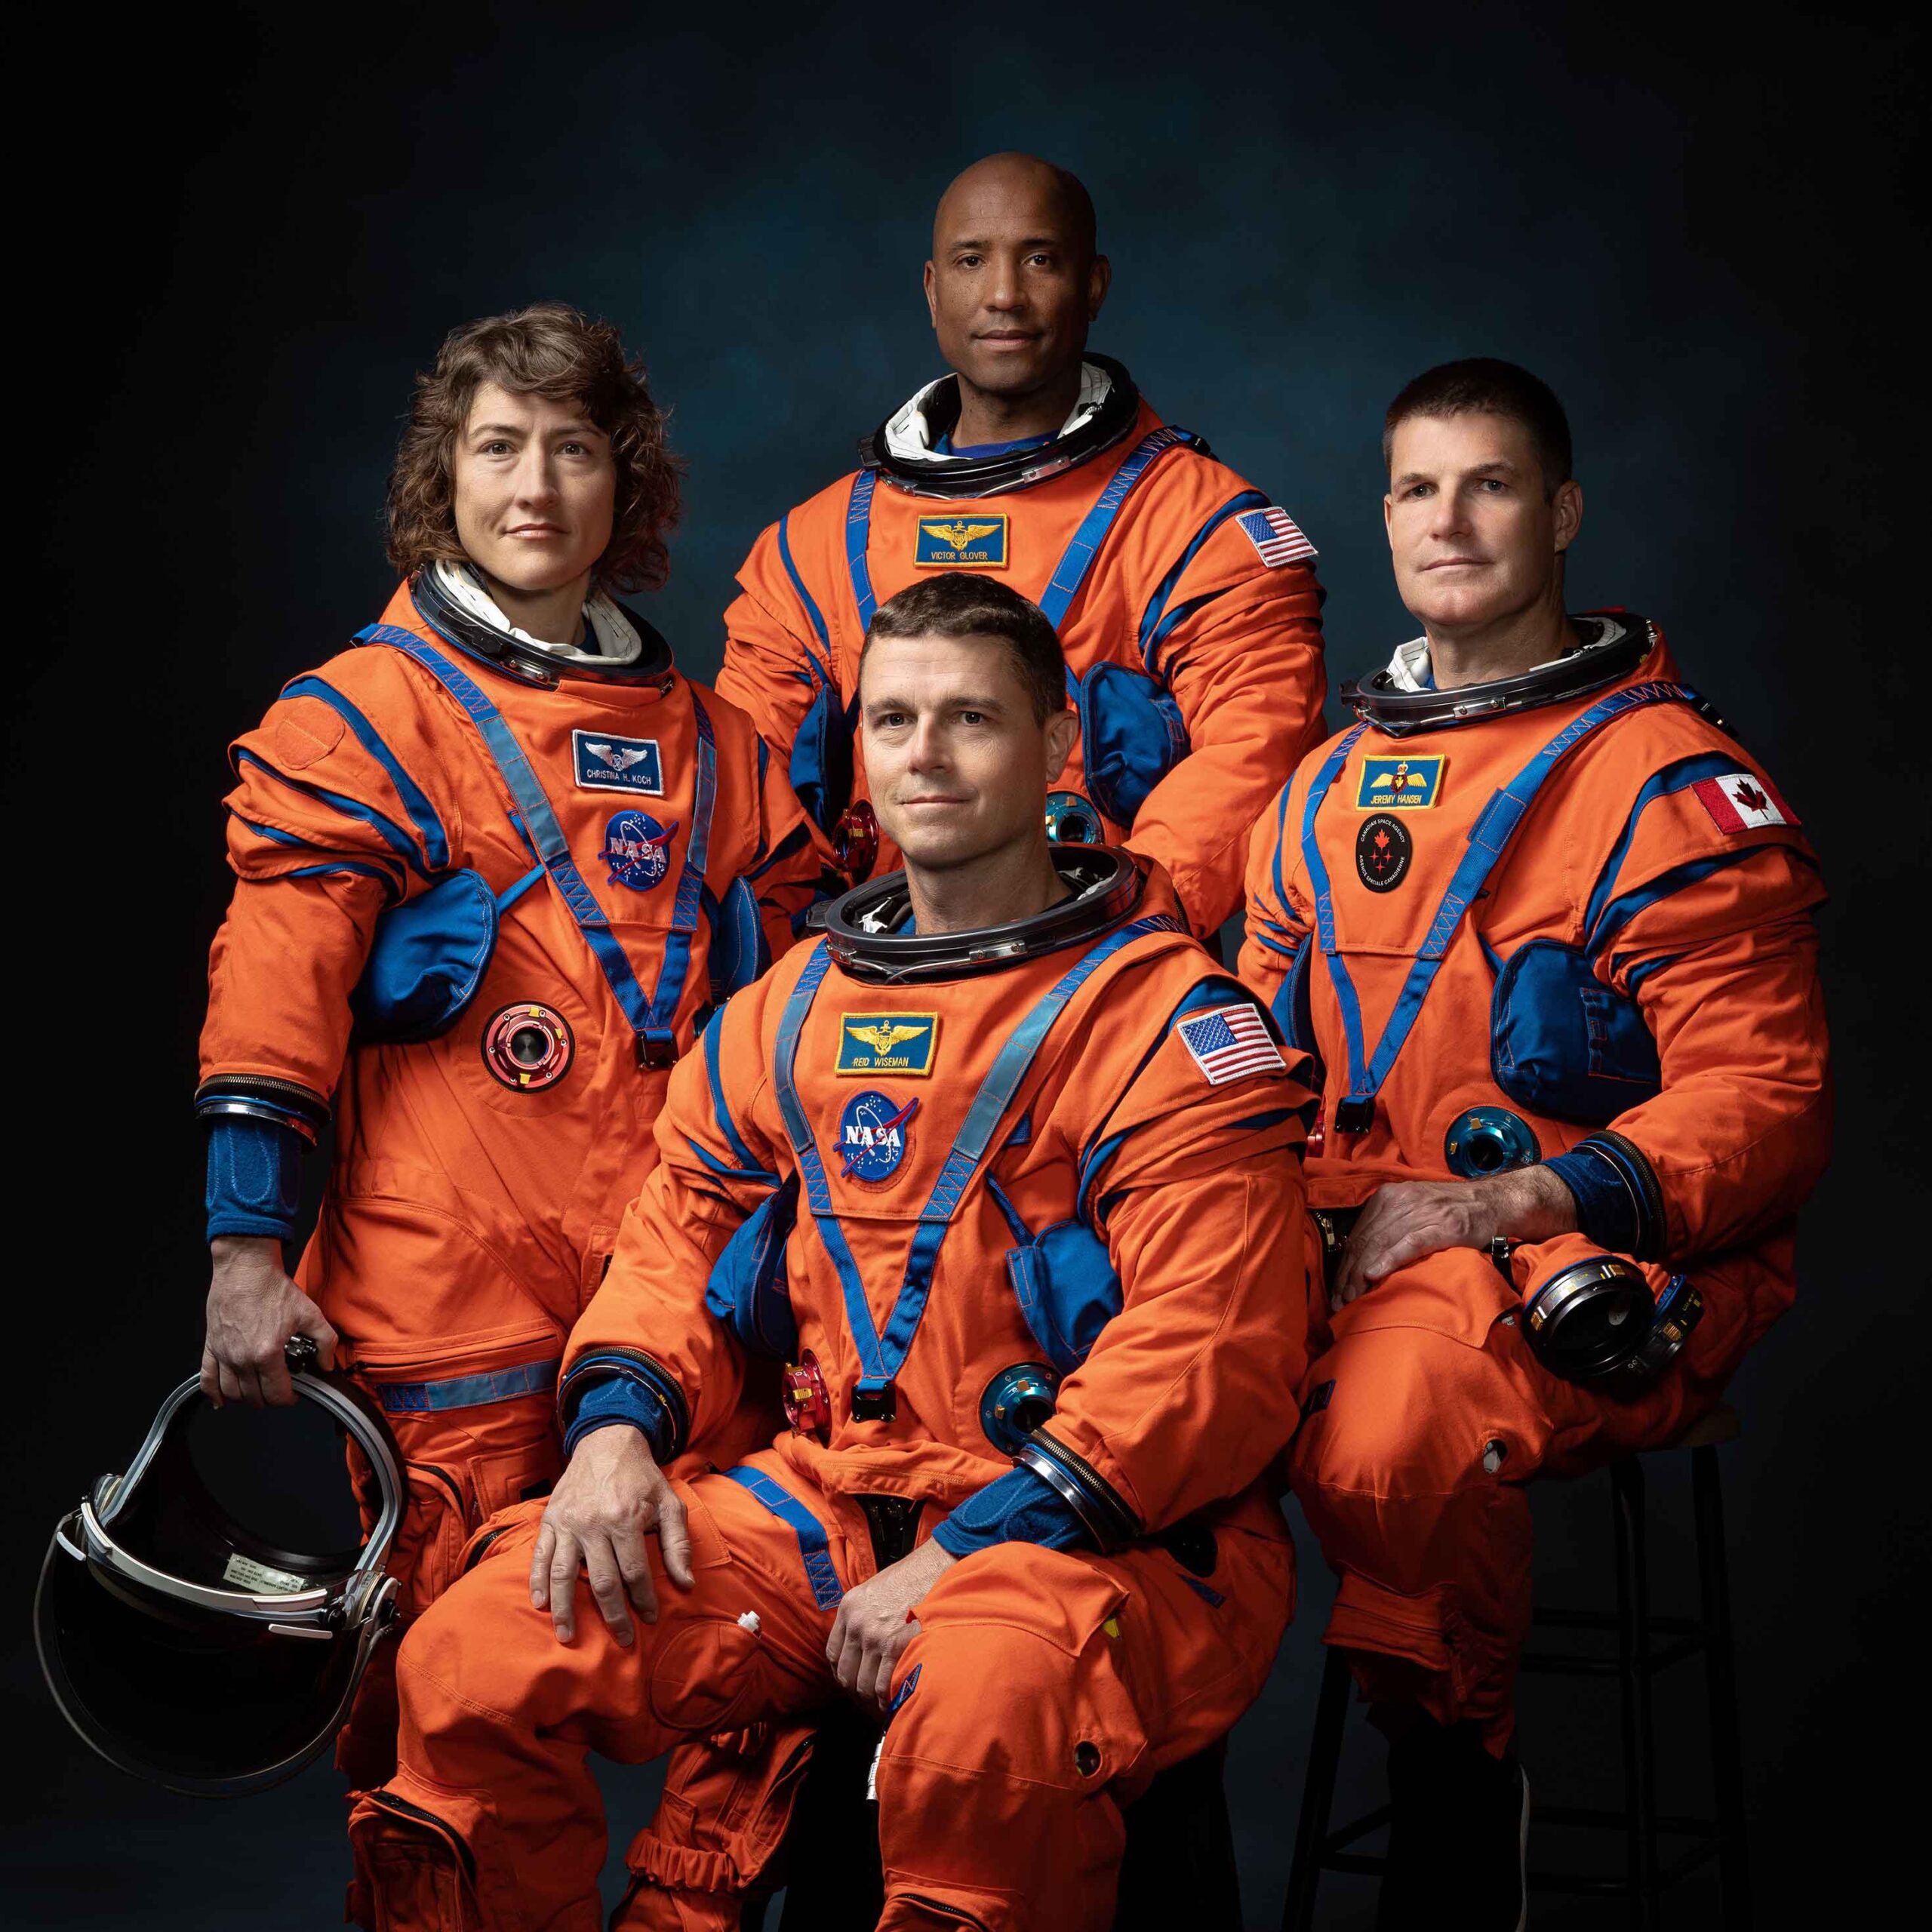 Artemis II's astronauts: Reid Wiseman, Victor Glover, Christina Hammock, and Jeremy Hansen.